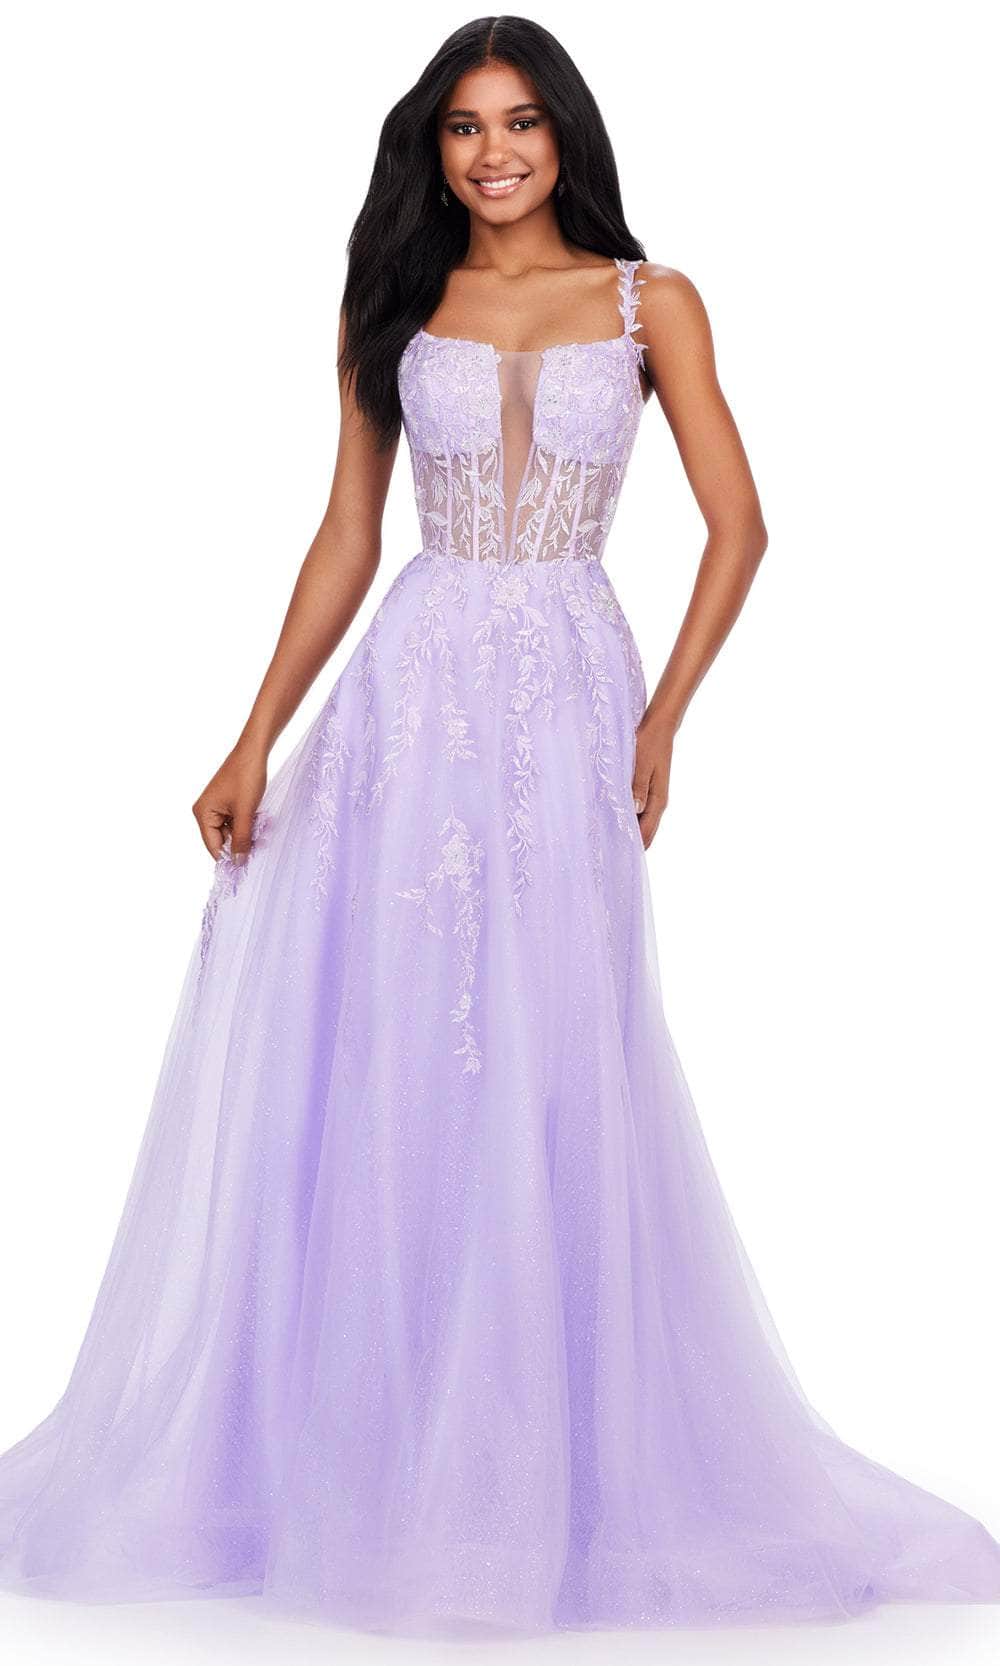 Ashley Lauren 11526 - Lace-Up Back V-Neck Prom Gown Prom Dresses